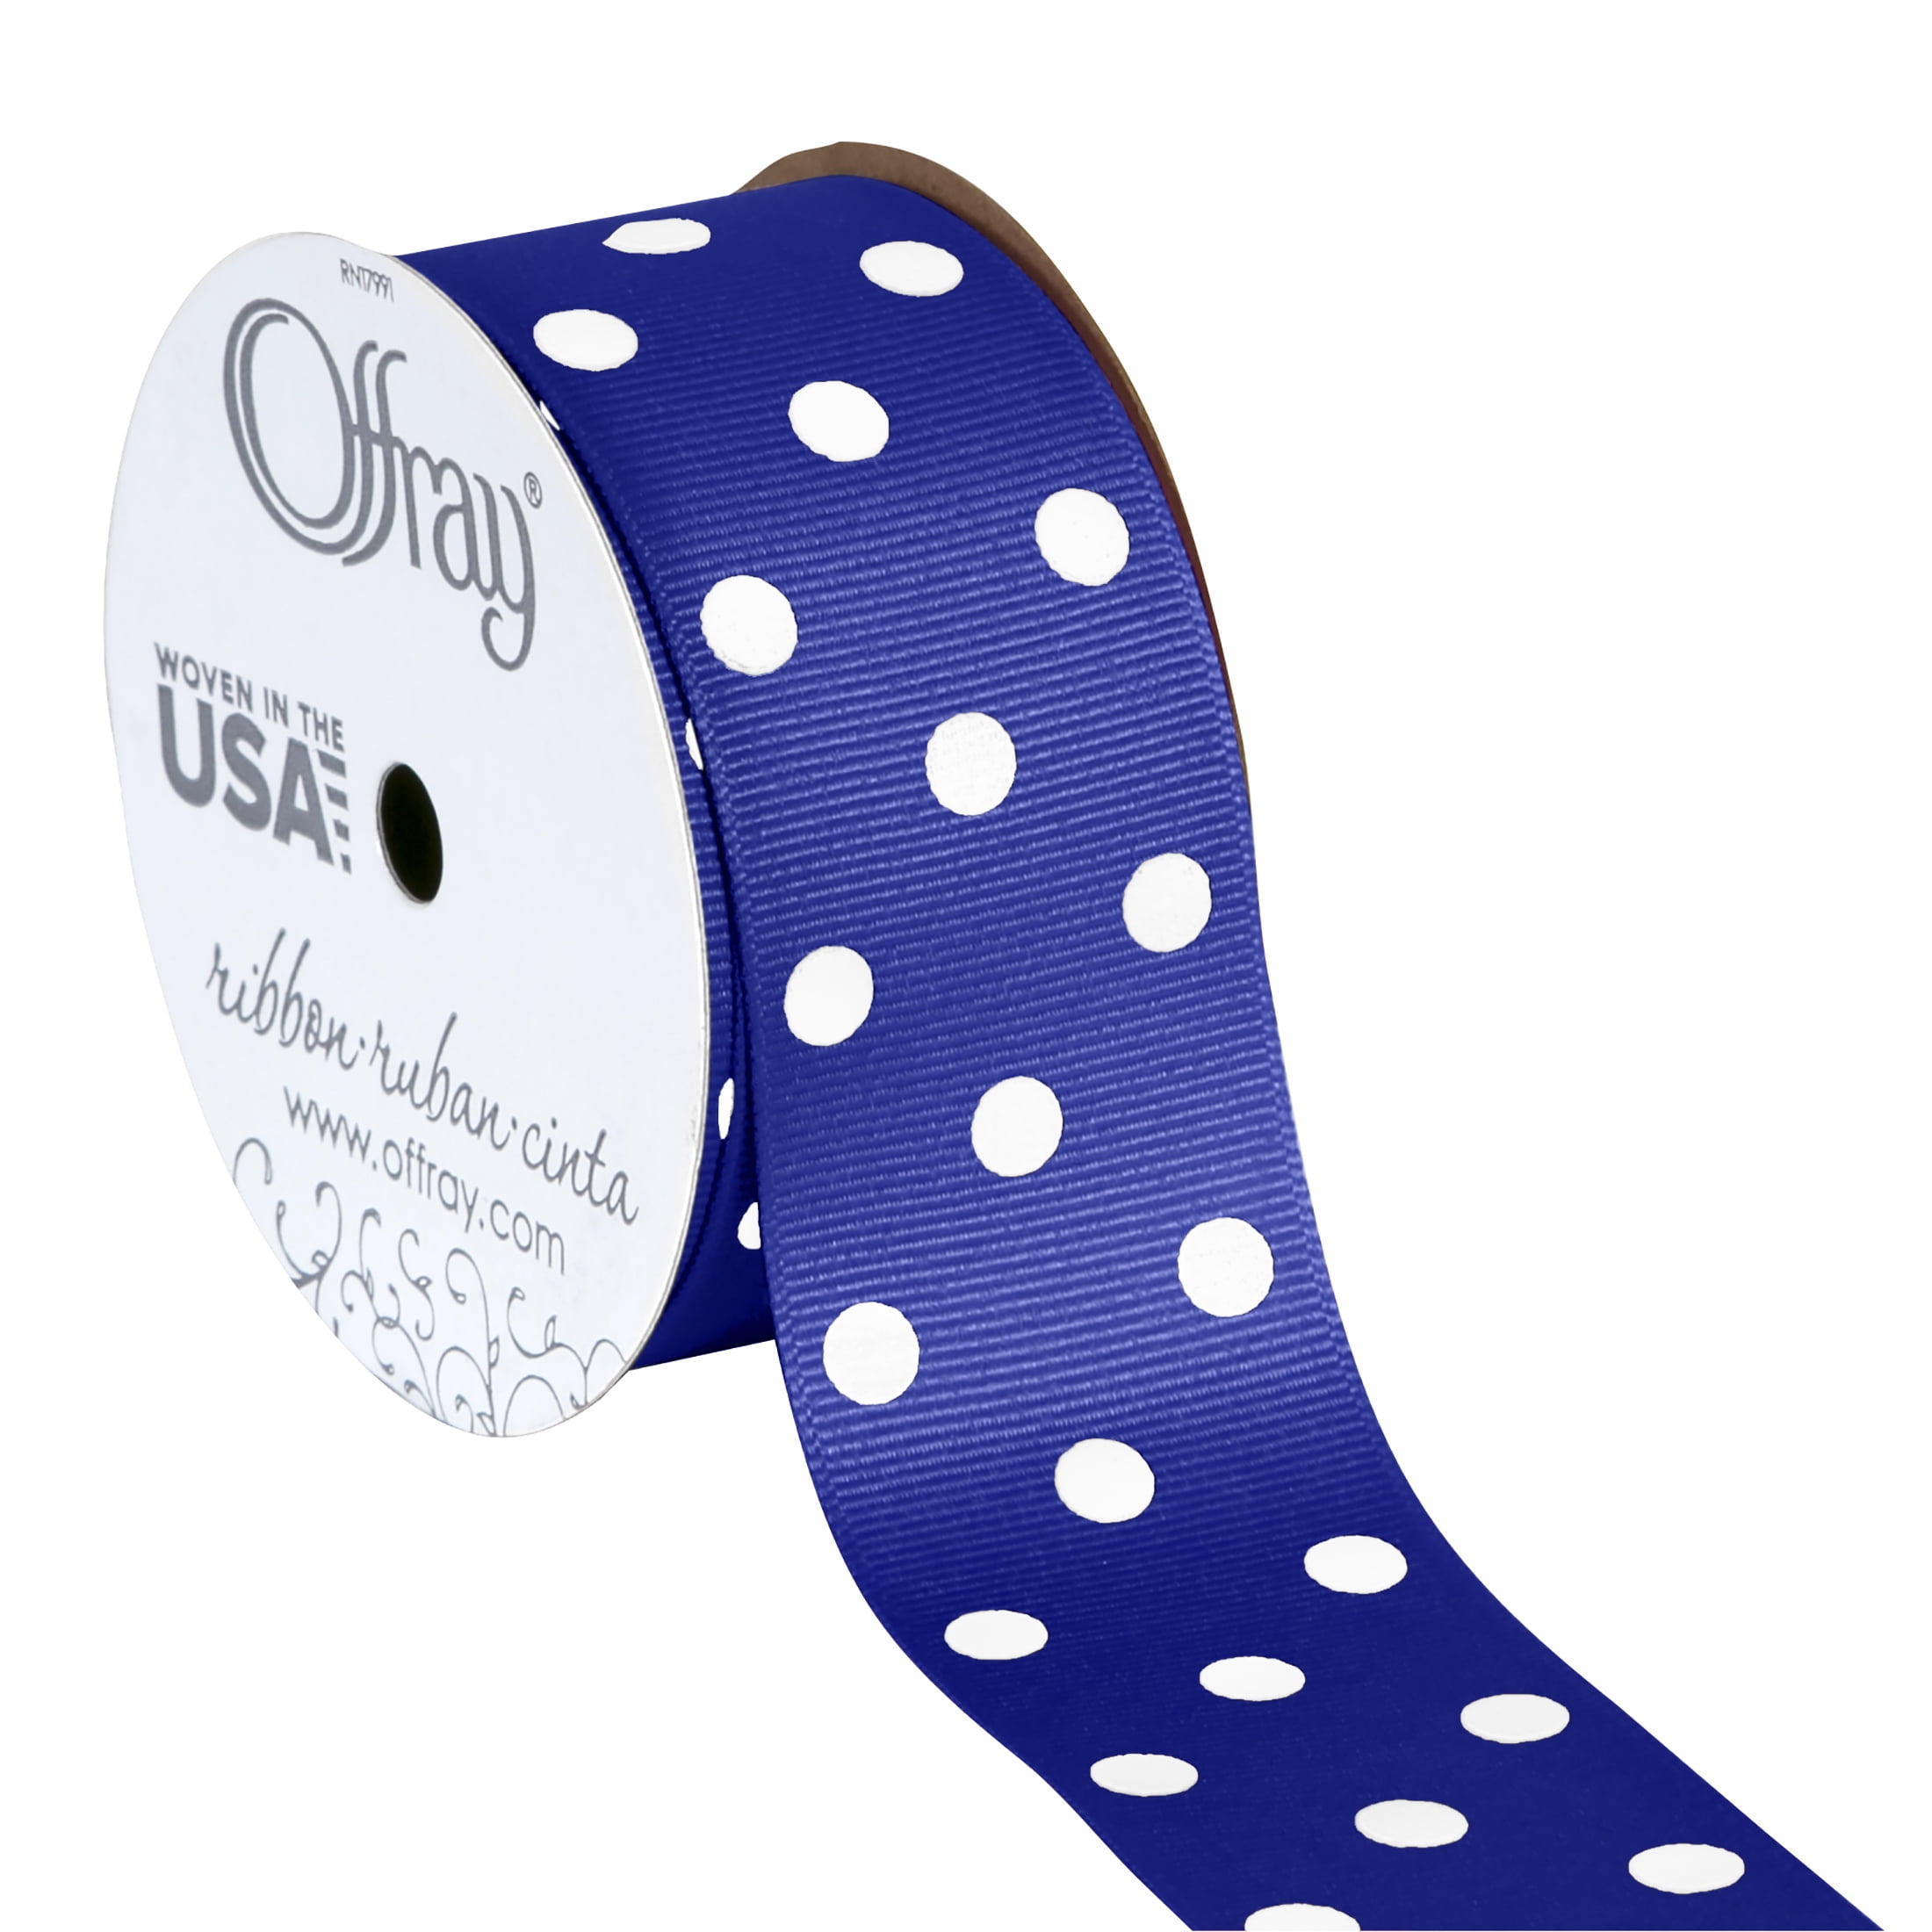 Offray Ribbon, Royal Blue with White Polka Dot 1 1/2 inch Grosgrain Polyester Ribbon, 9 feet, 1 Each